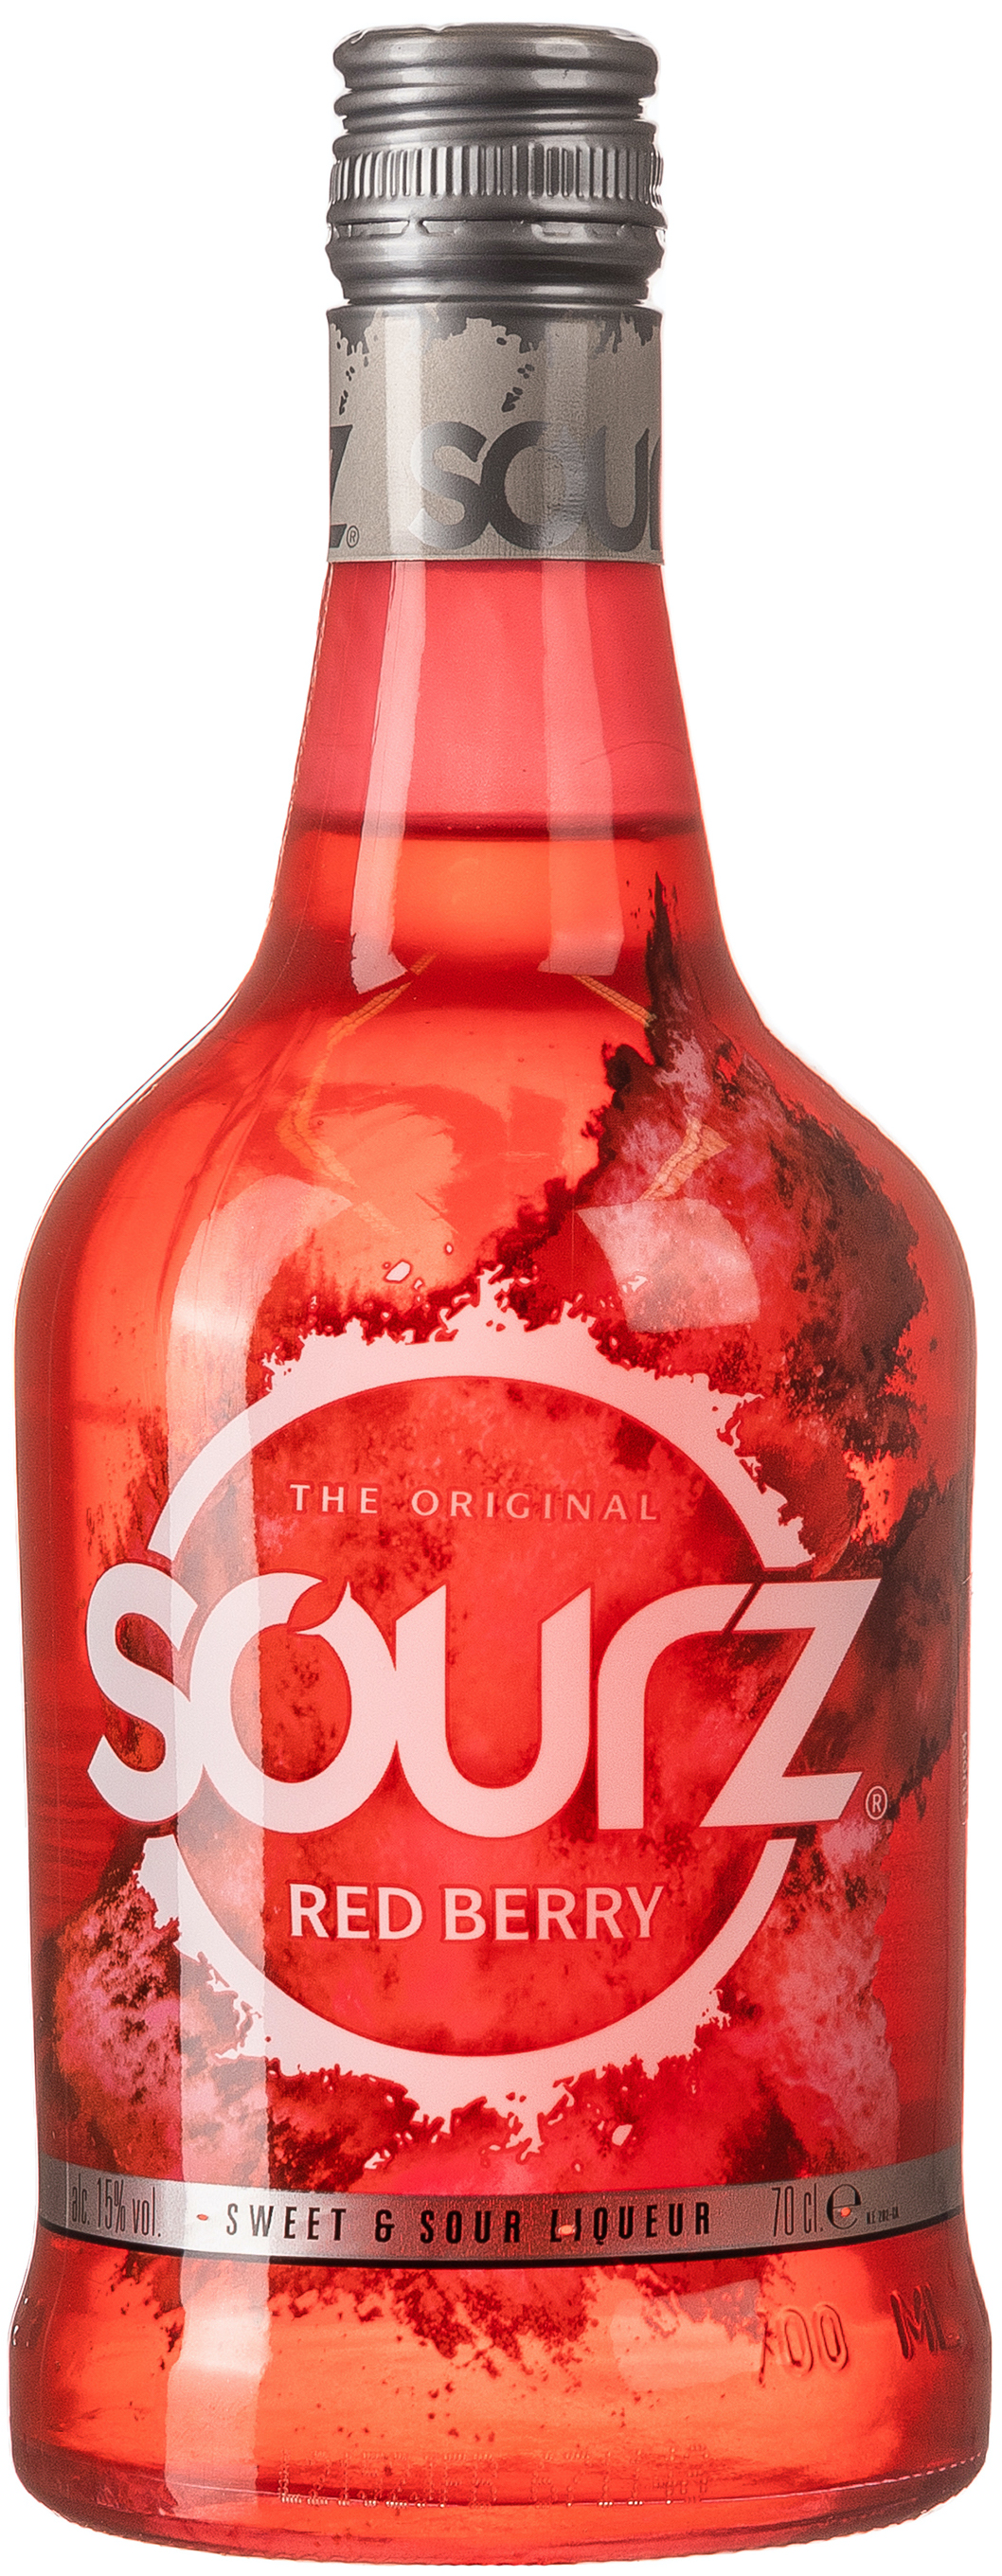 Sourz Red Berry 15% vol. 0,7L